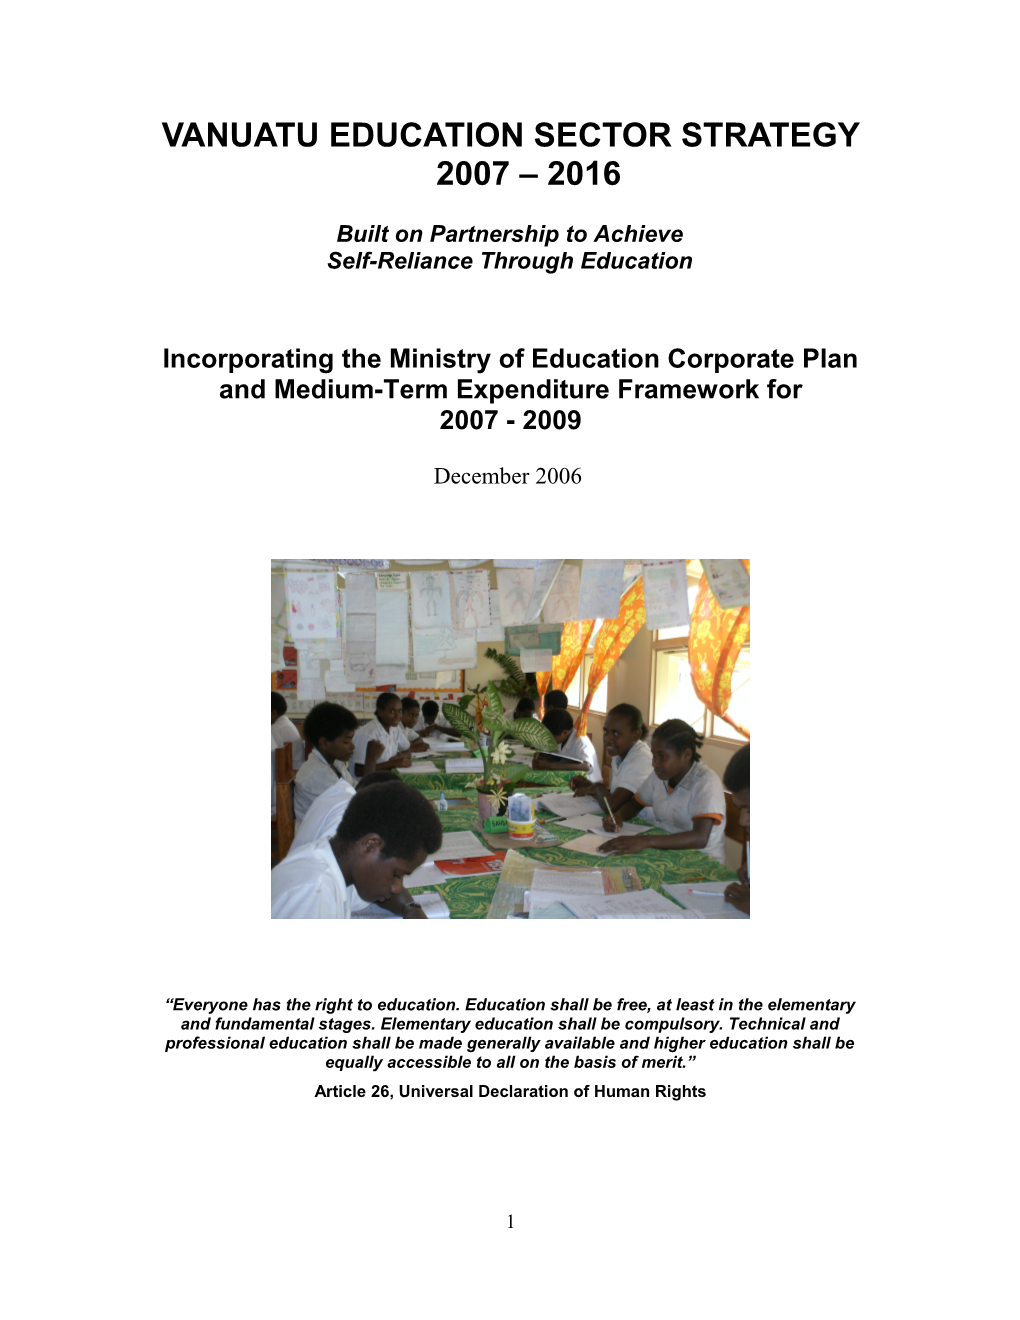 Vanuatu Education Sector Strategy 2007 - 2016